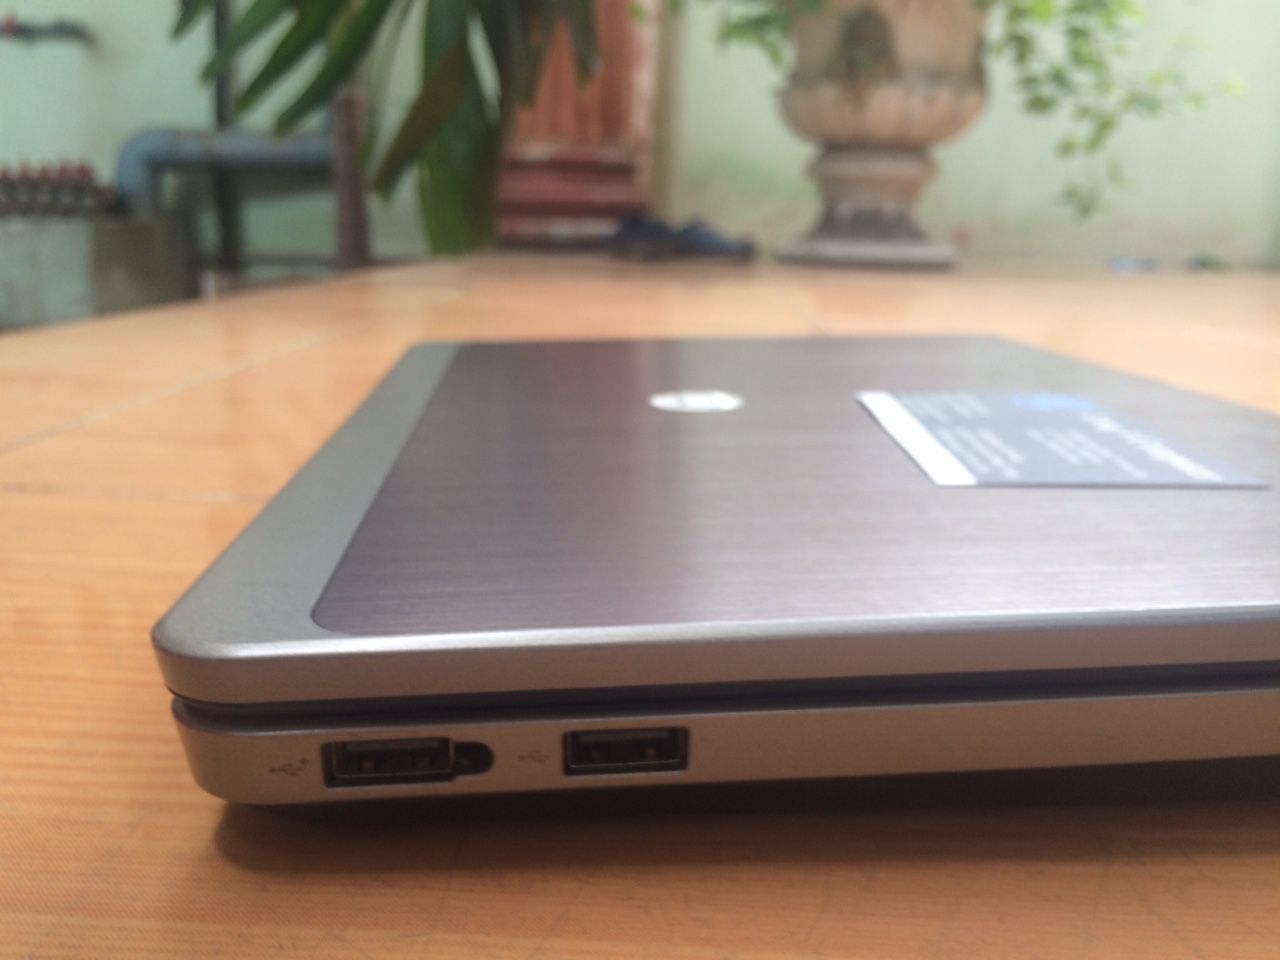 HP Probook Core i5 4230S Ram 4GB HDD 320GB, 12 inches